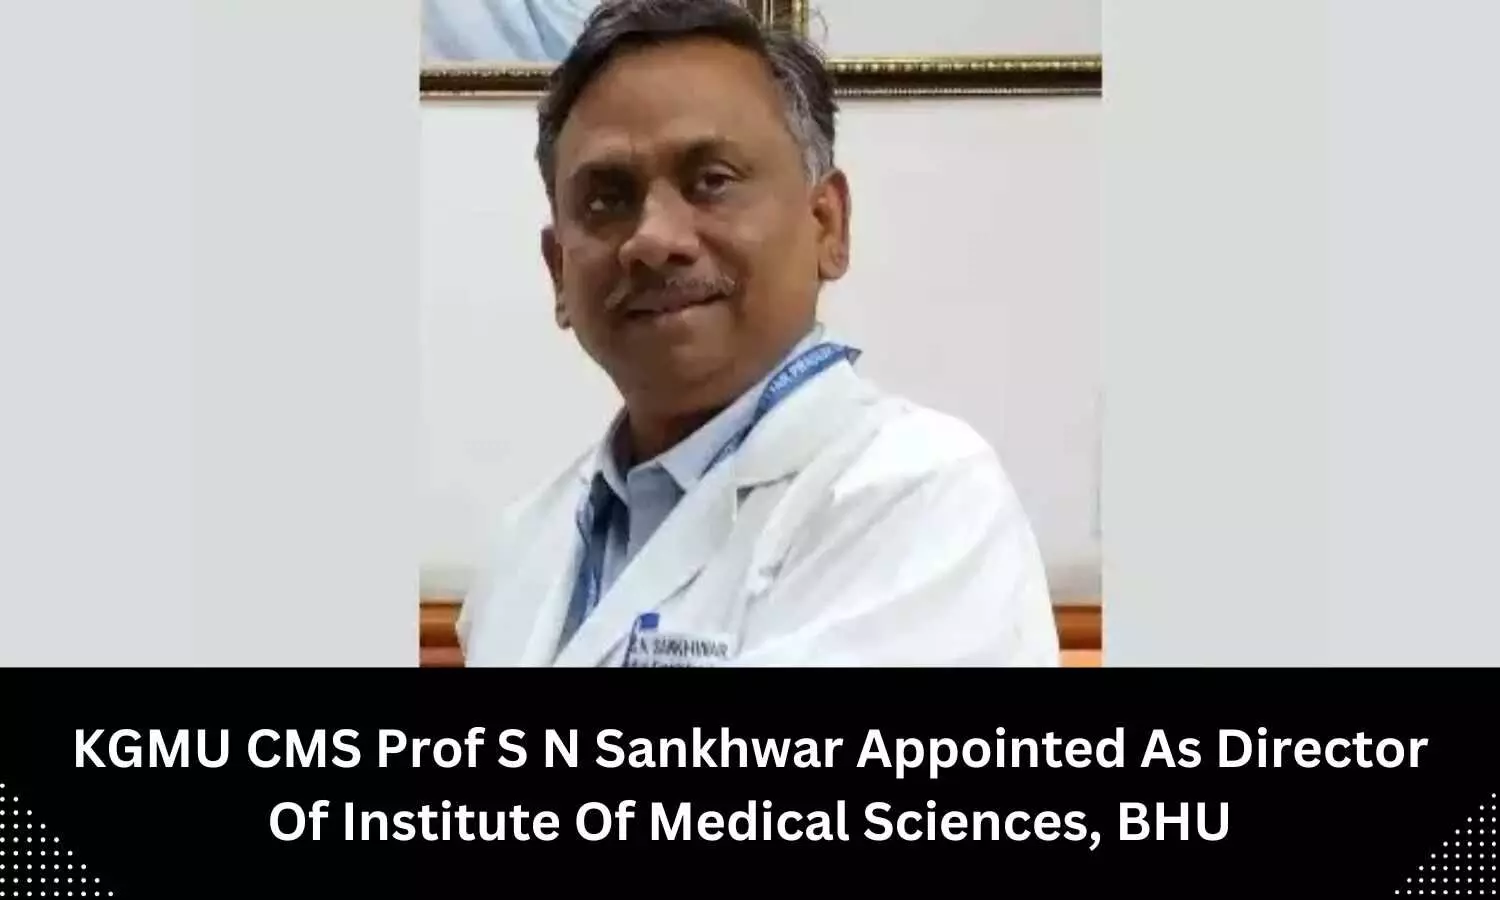 Renowned urologist Prof S N Sankhwar named as director of Institute of Medical Sciences, BHU